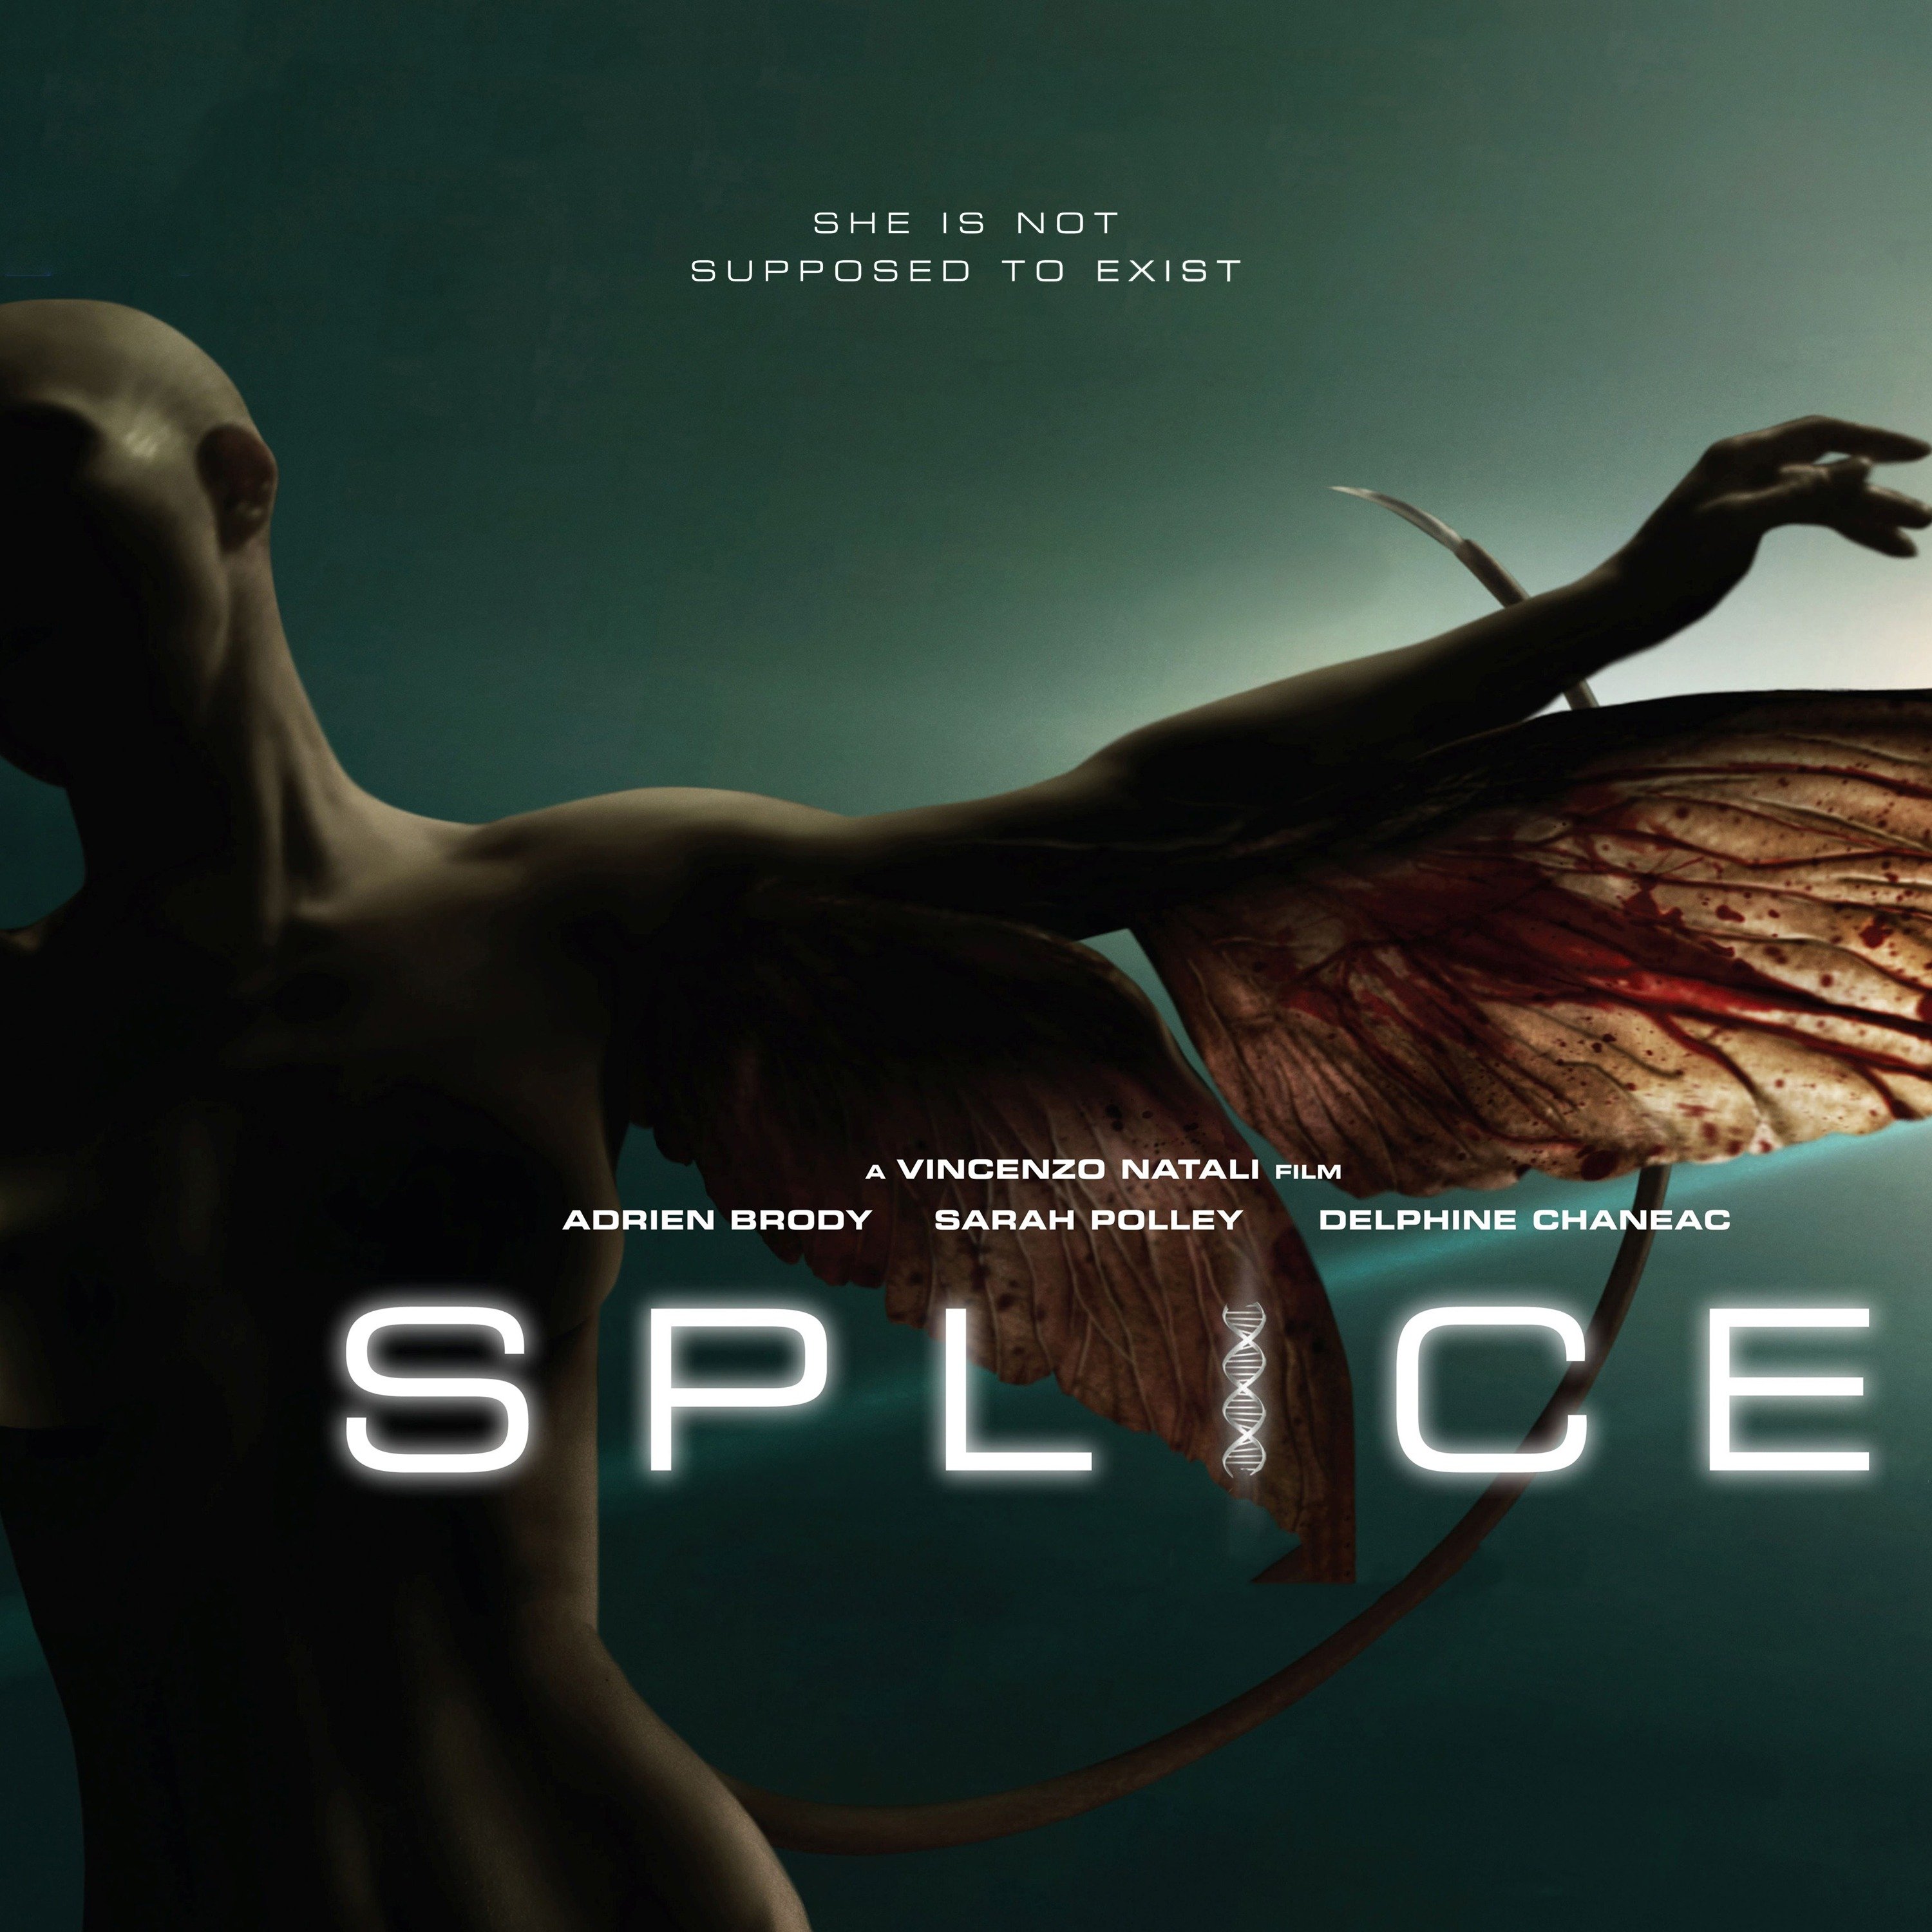 darren stinnett recommends Watch Splice Movie Online